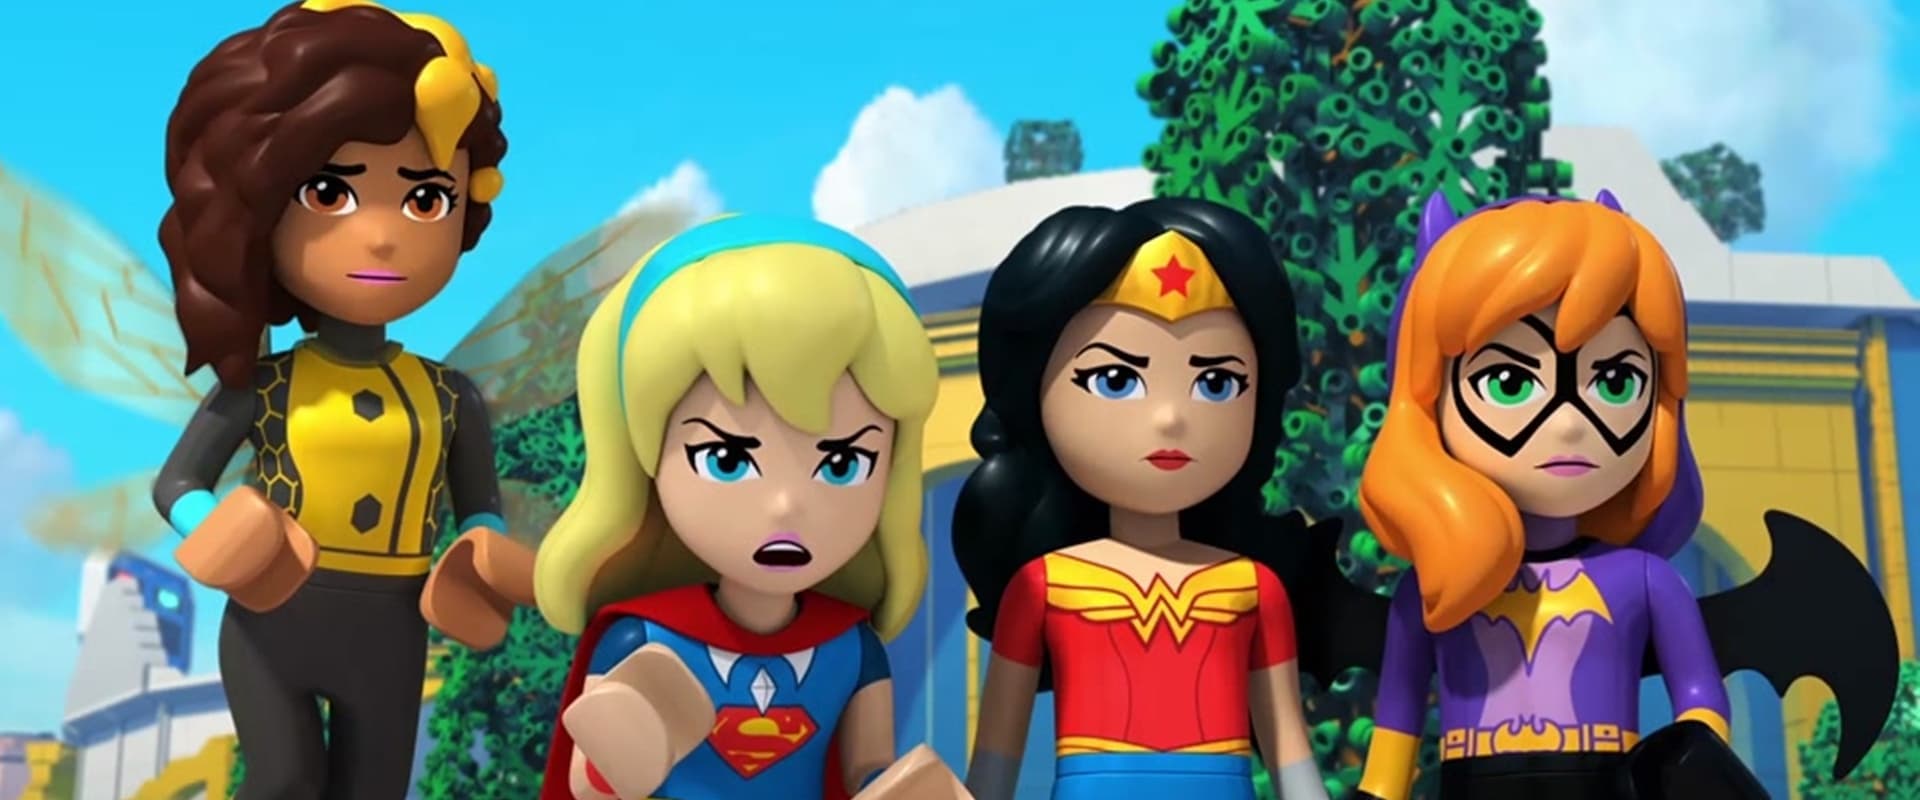 LEGO DC Super Hero Girls: Galactic Wonder